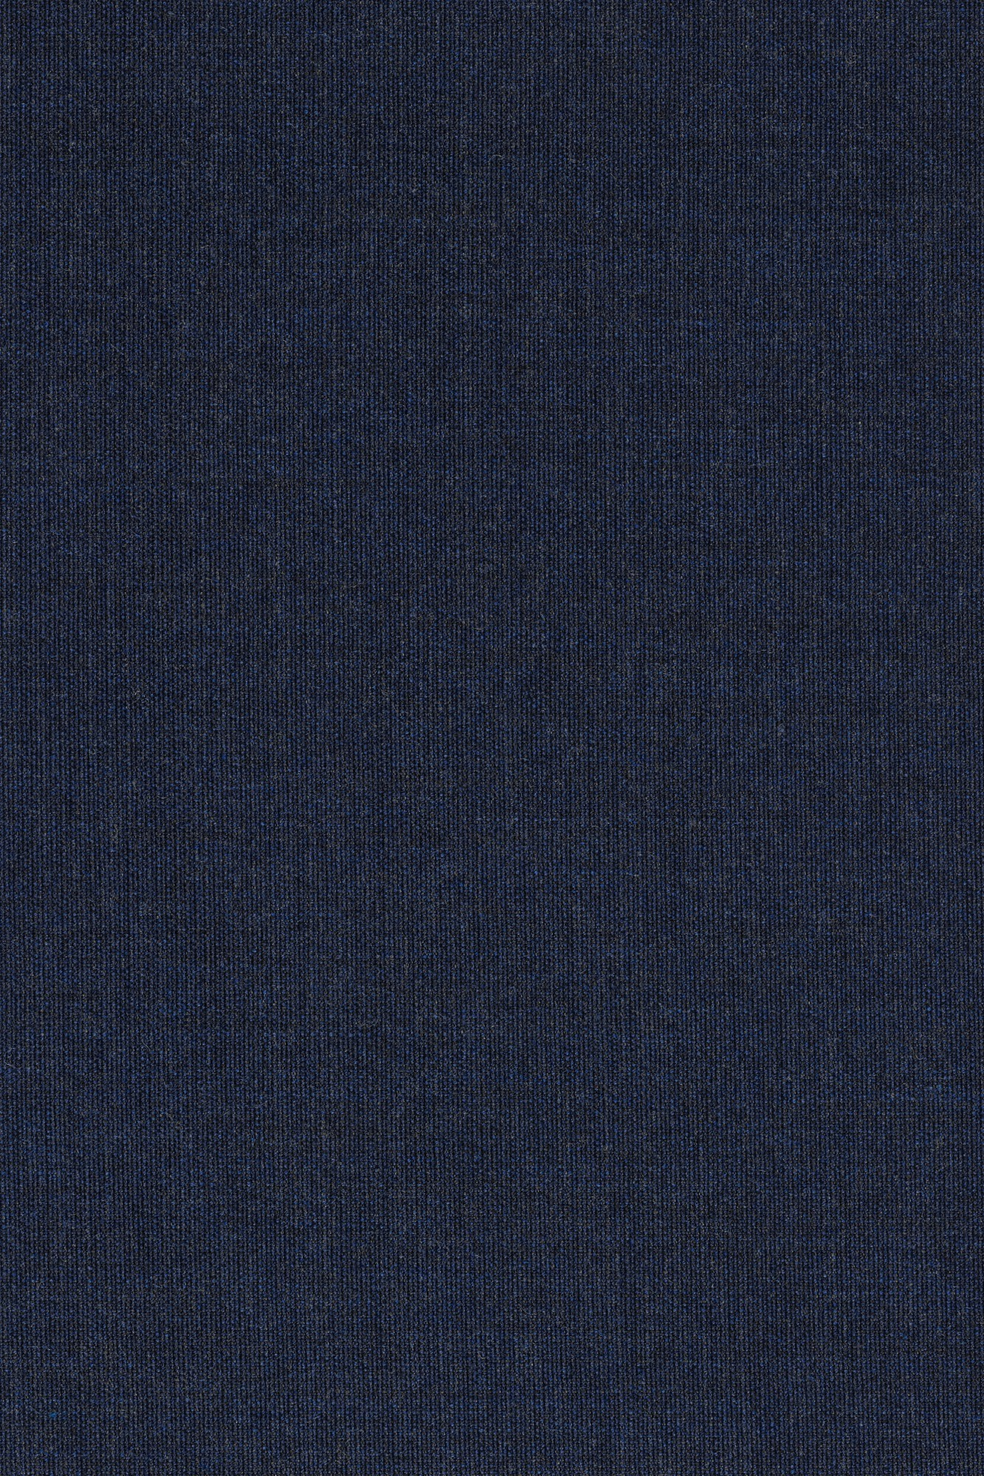 Fabric sample Canvas 2 794 blue